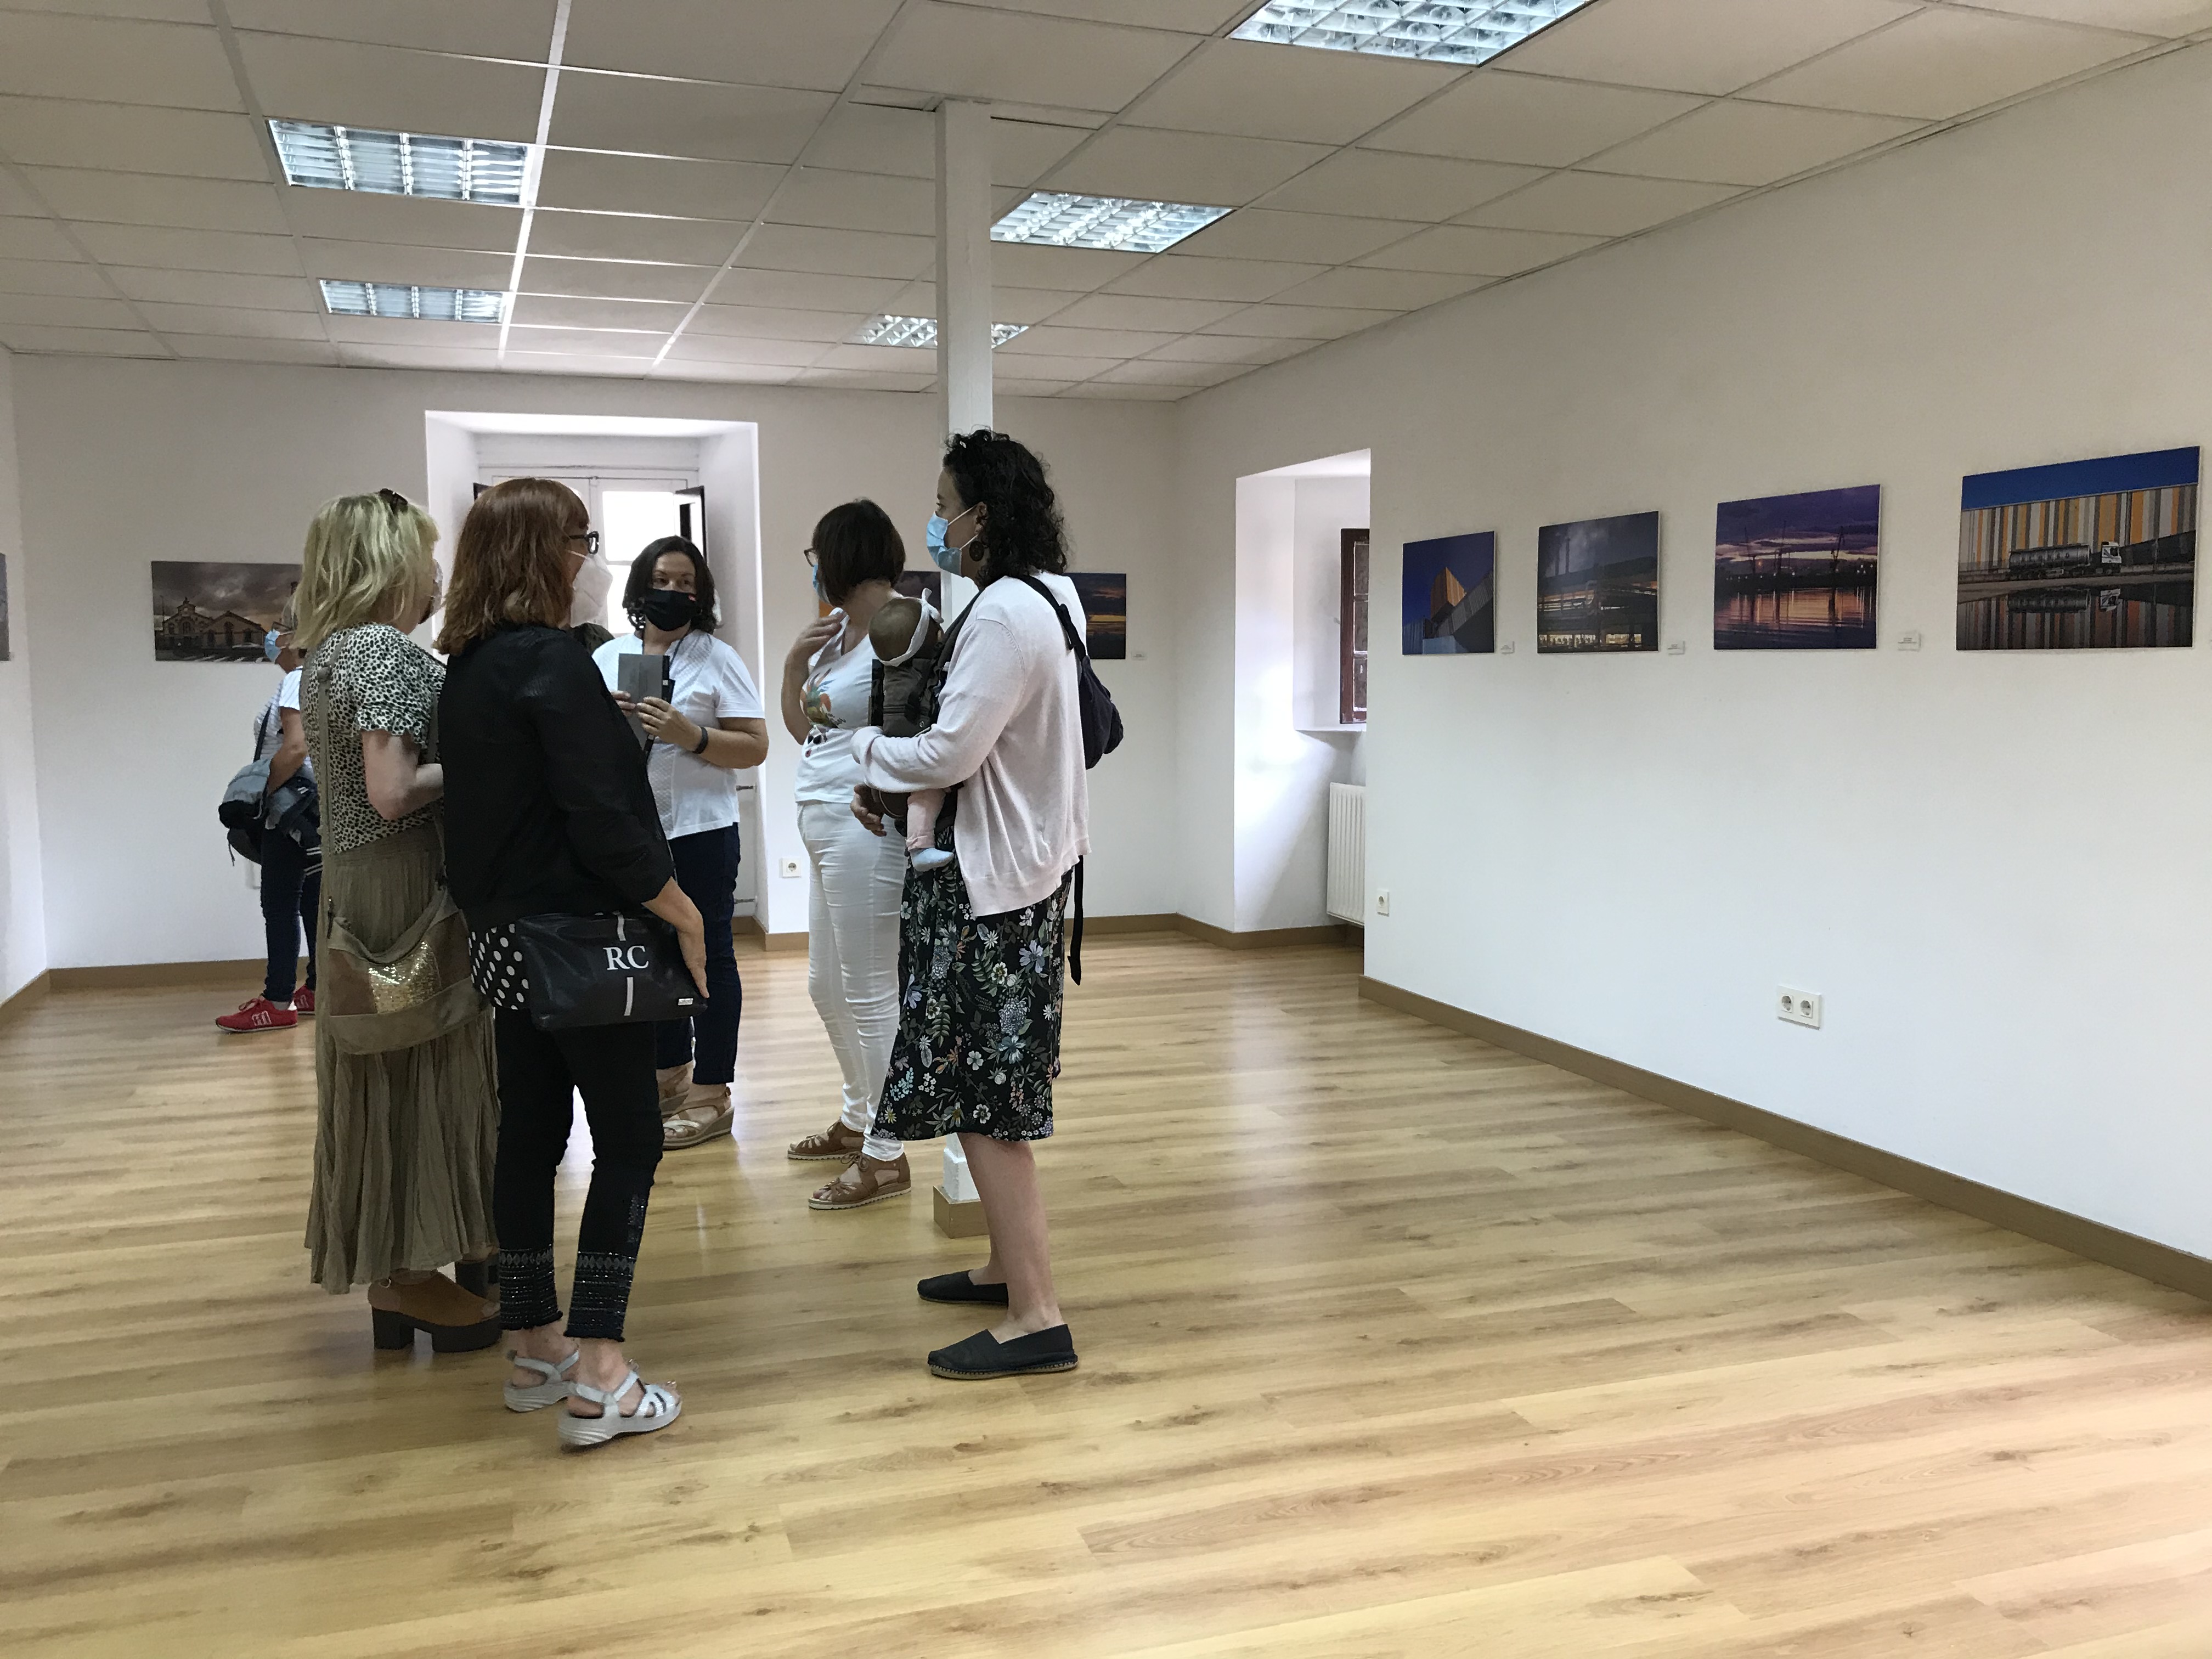 El Museo de Historia Urbana de Avilés aumentó el número de visitantes este verano pese a la pandemia del Covid